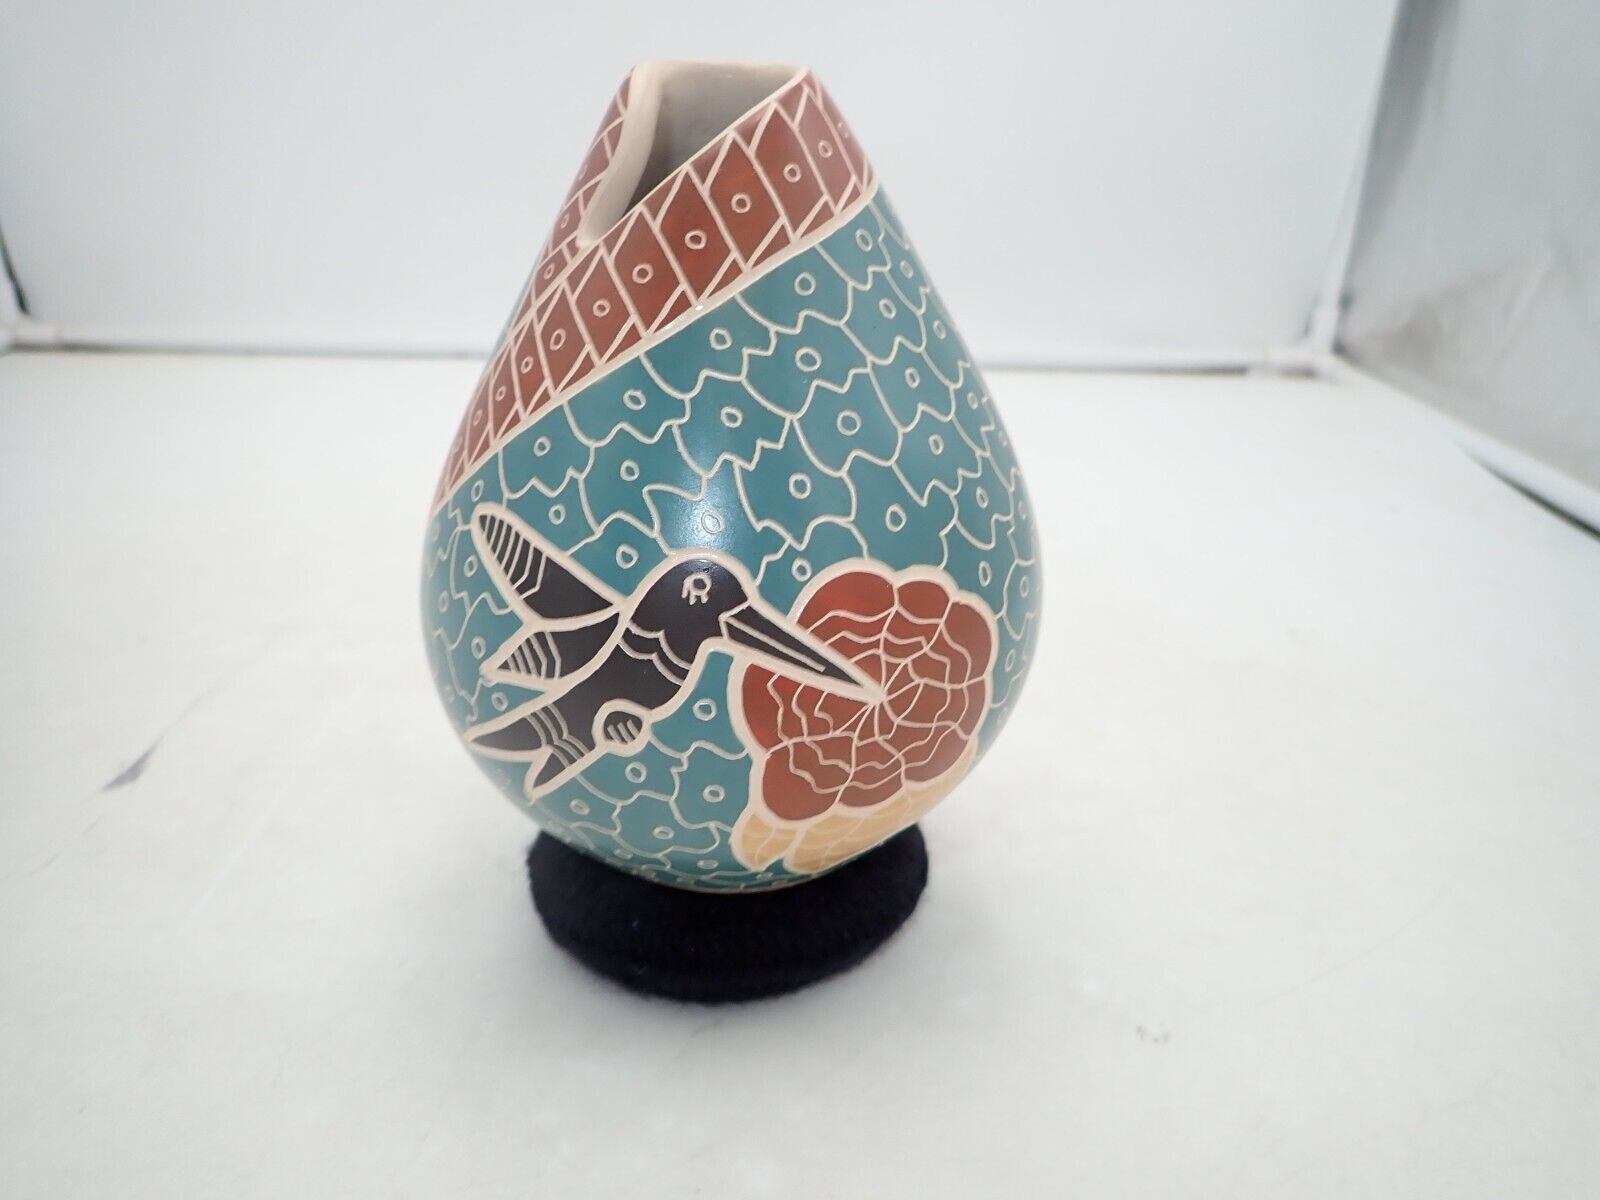 Mata Ortiz Hand built Carved &Painted Hummingbird Pot or Olla by Vidal Corona